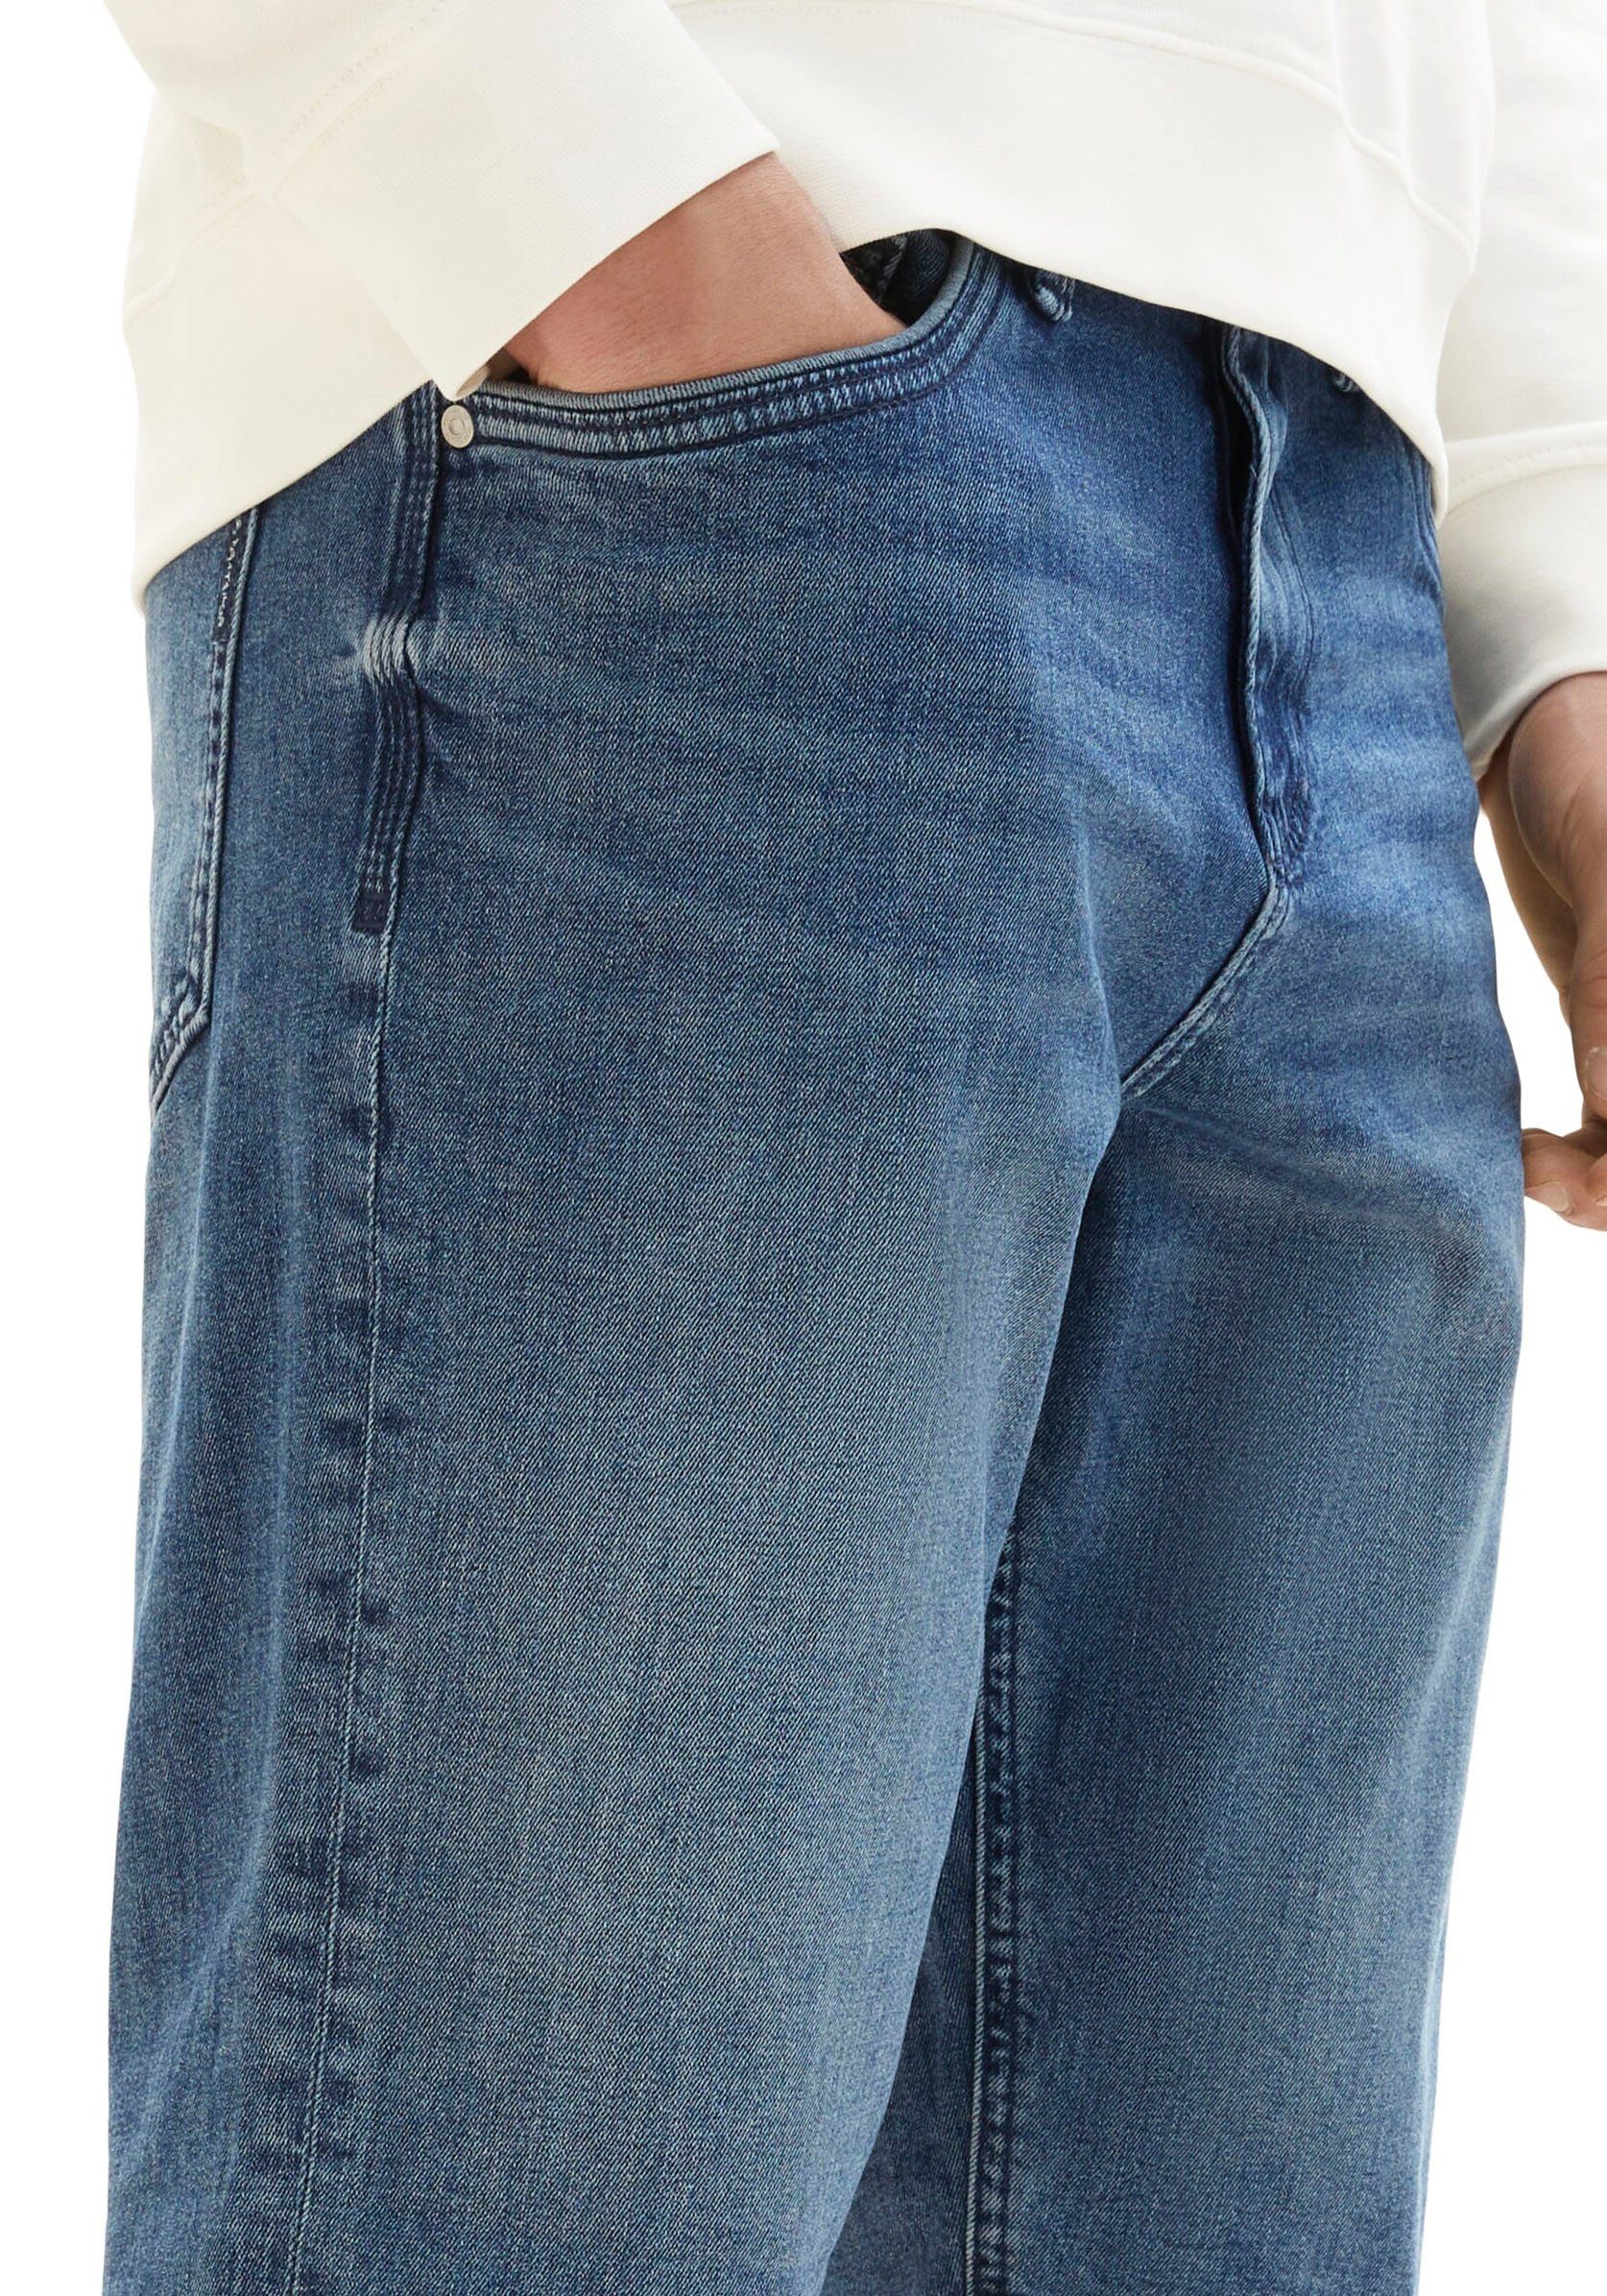 5-Pocket-Jeans TOM stone mid stone TAILOR